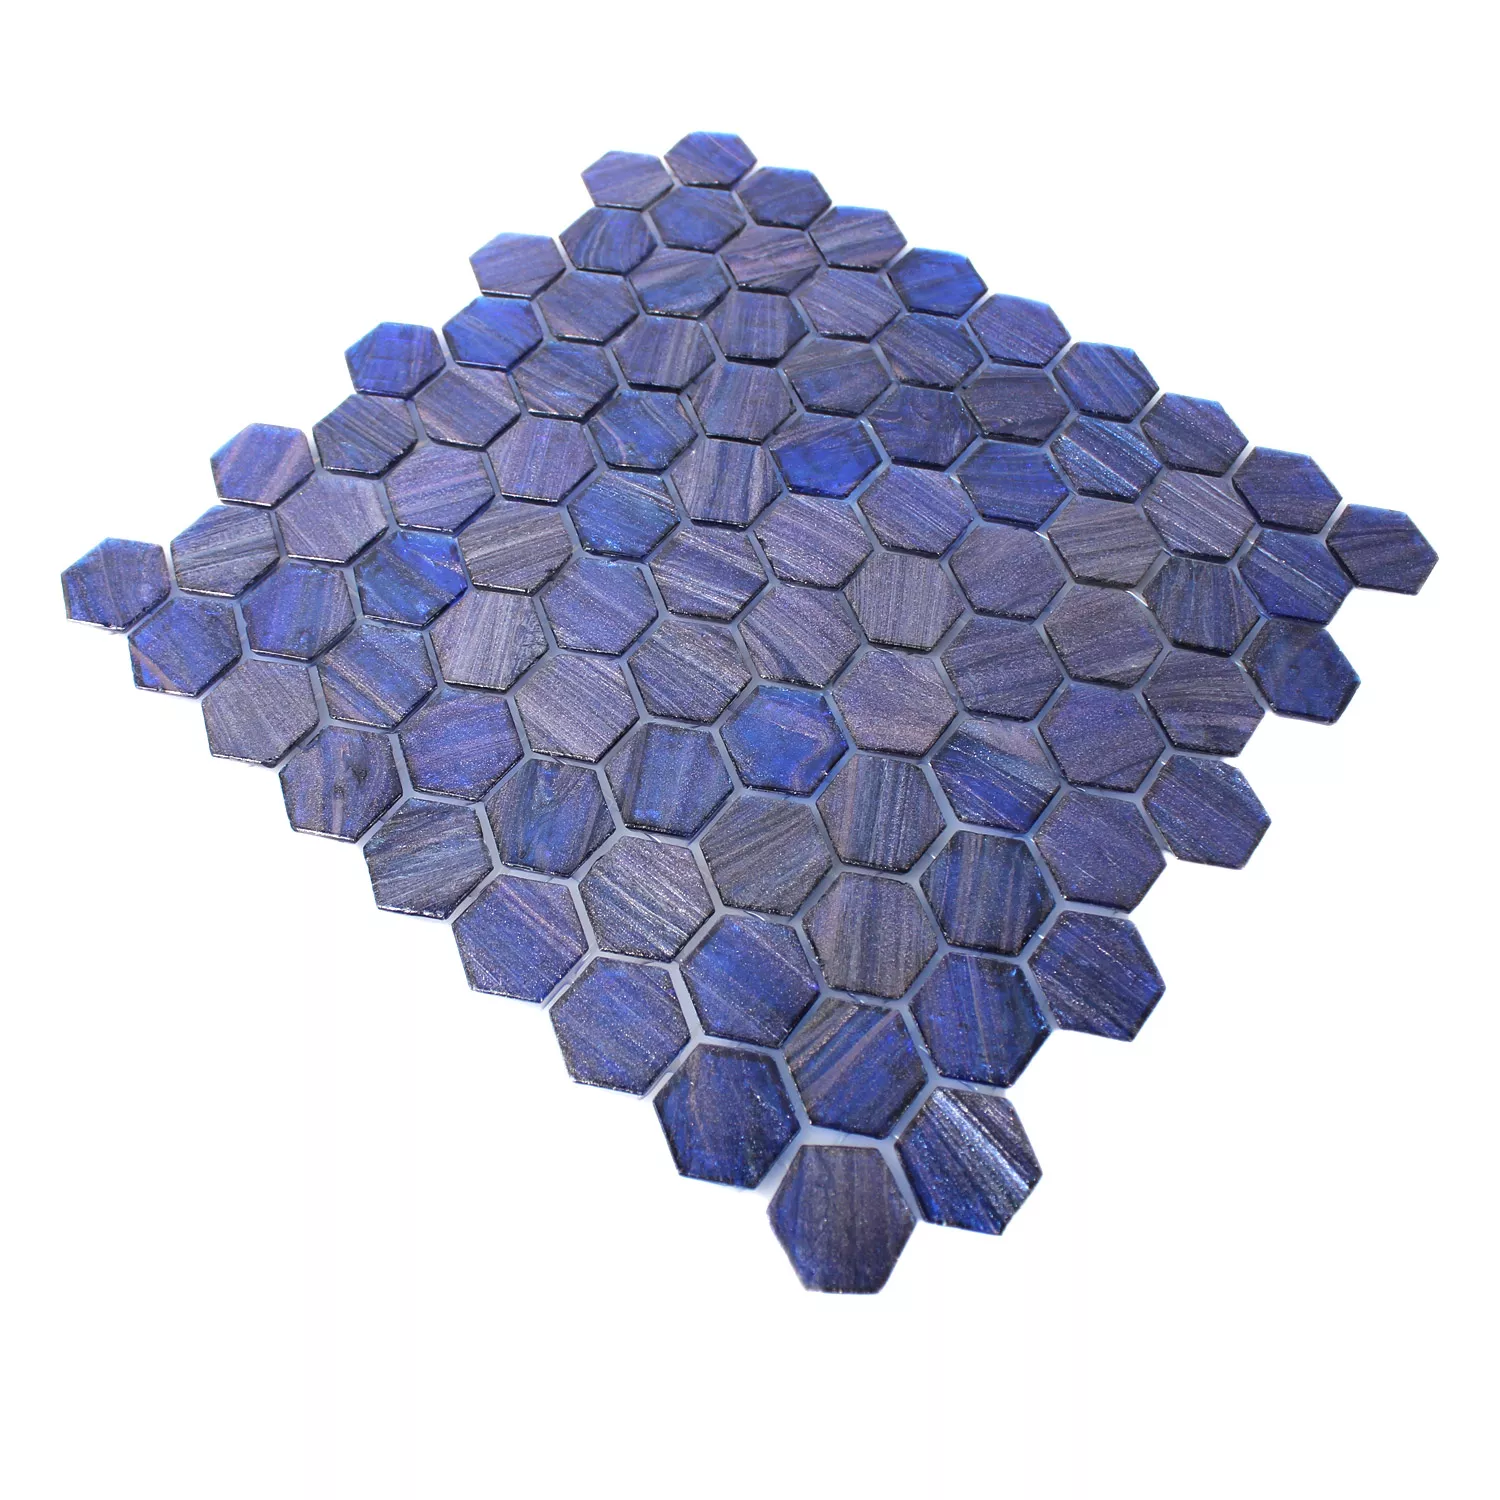 Trend-Vi Mosaik Fliser Glas Hexagon 239